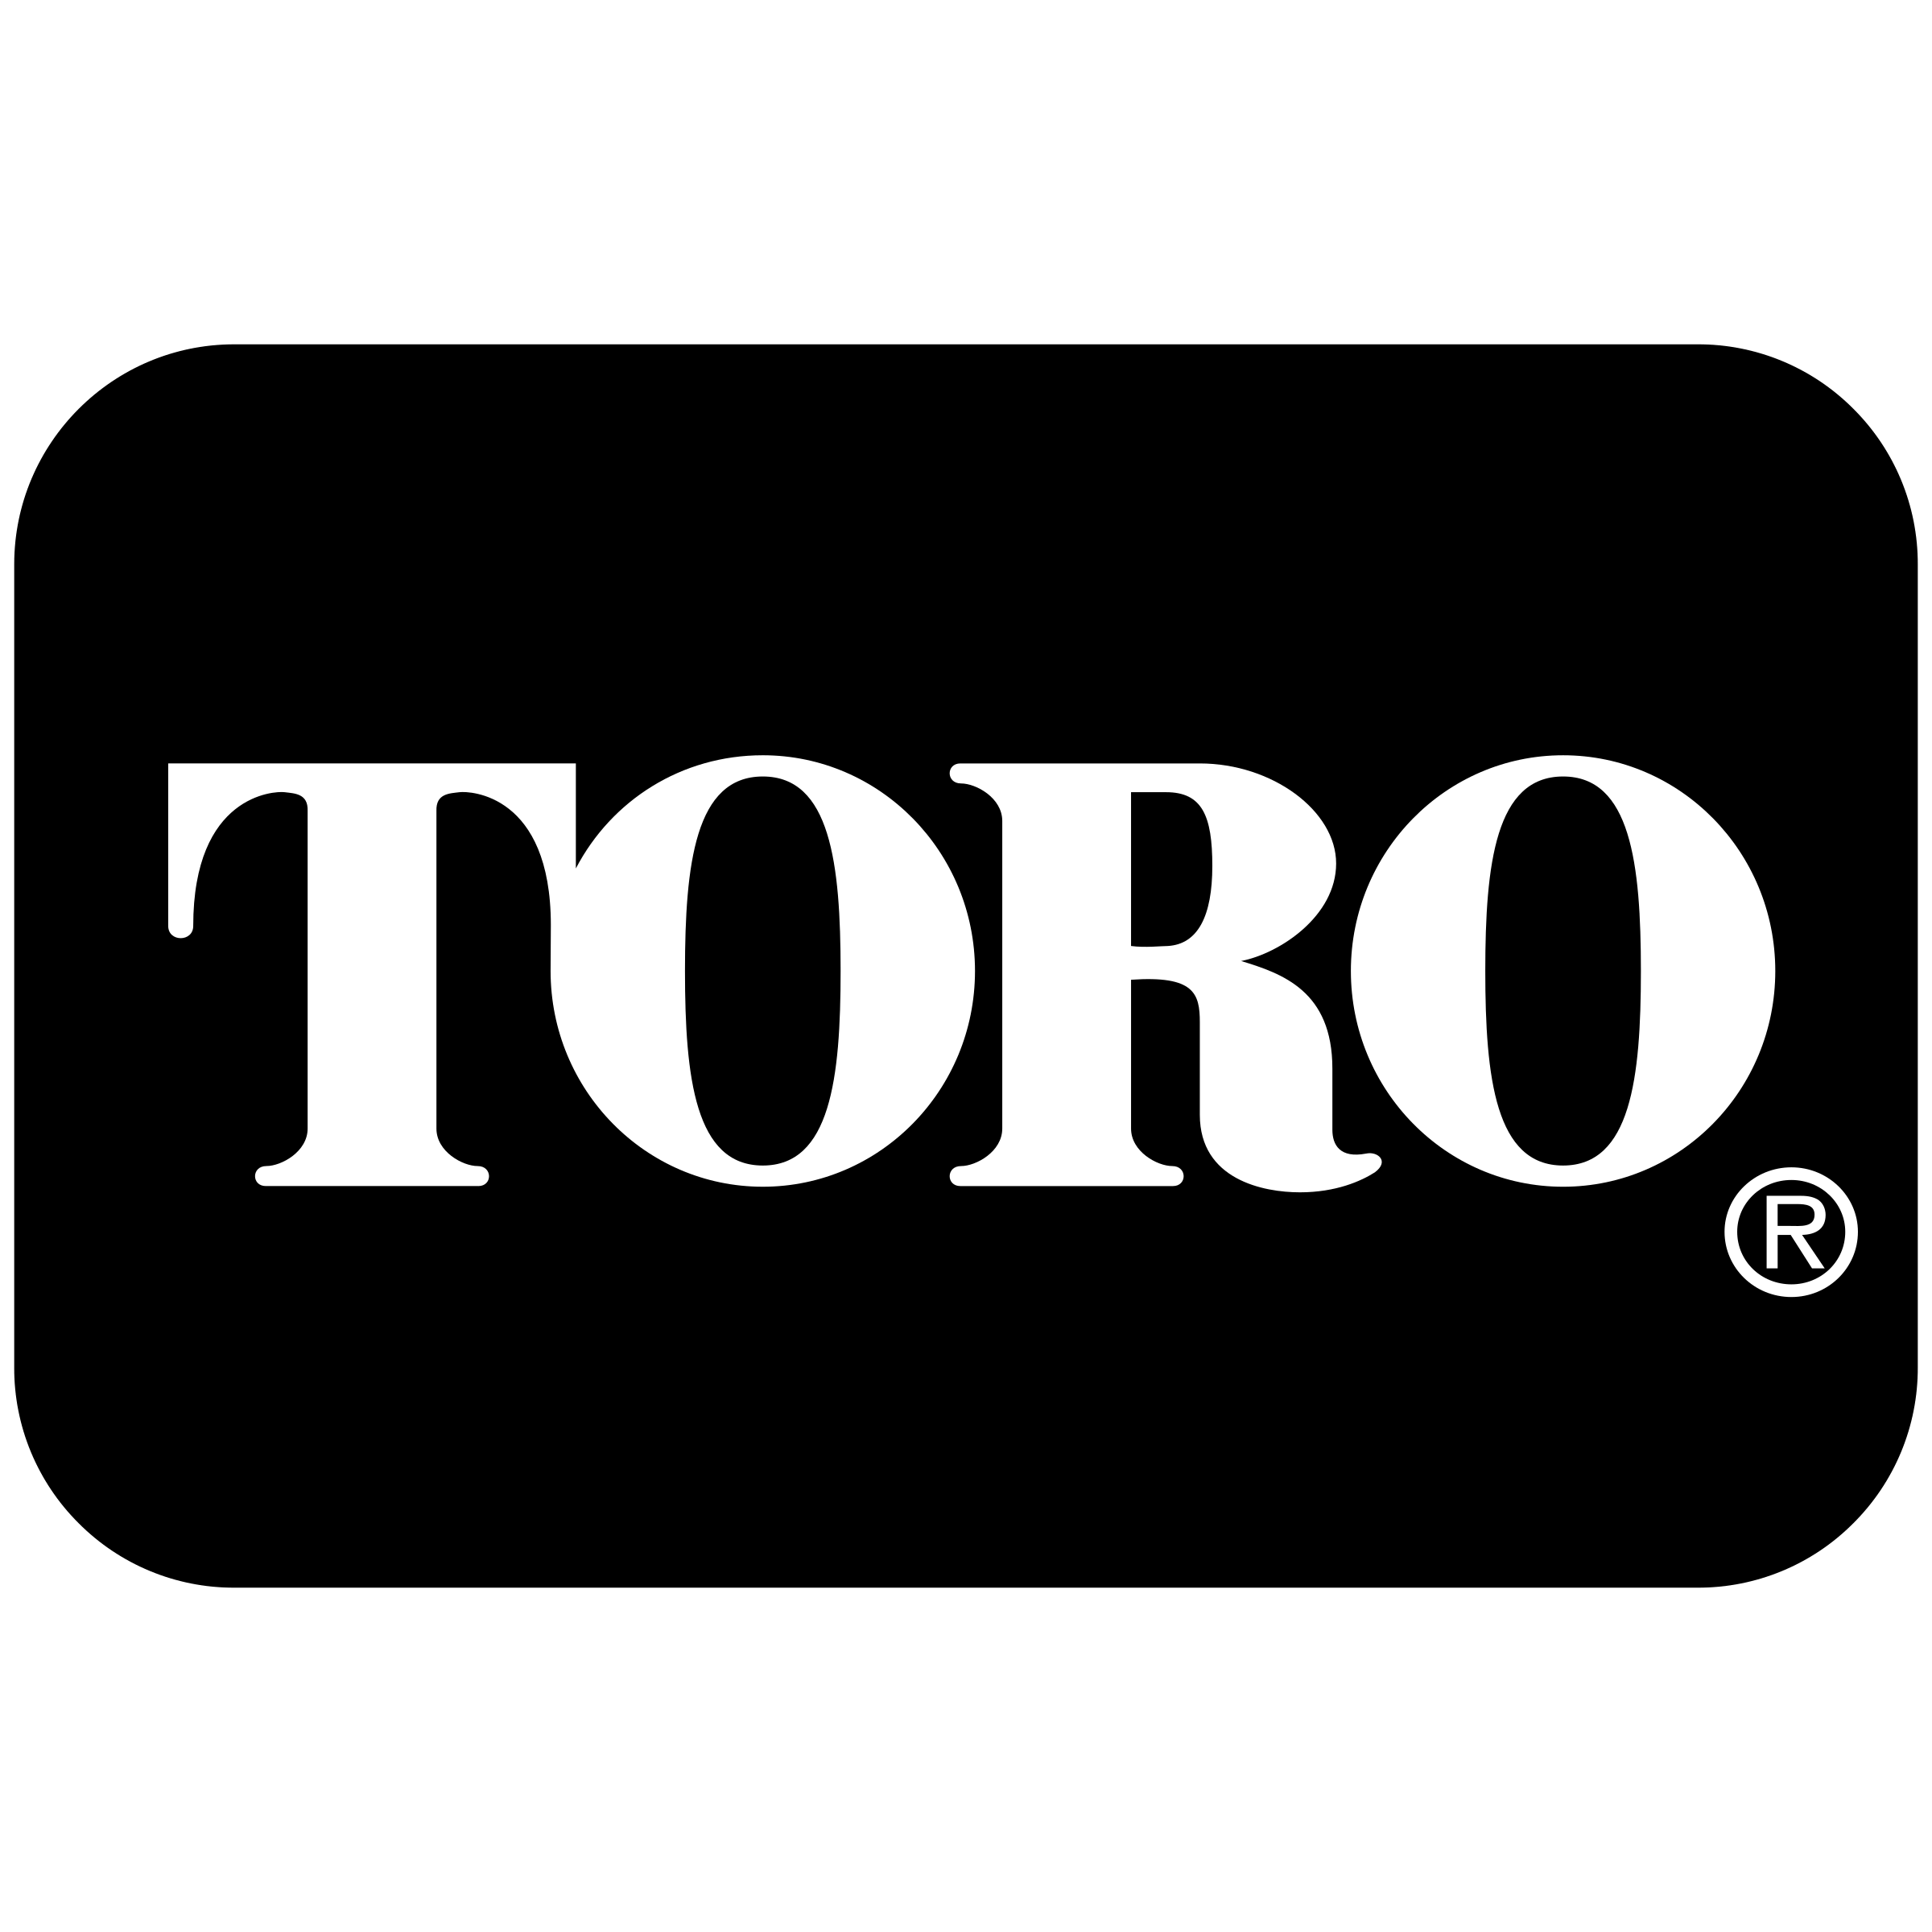 Toro Logo - Toro Logo PNG Transparent & SVG Vector - Freebie Supply